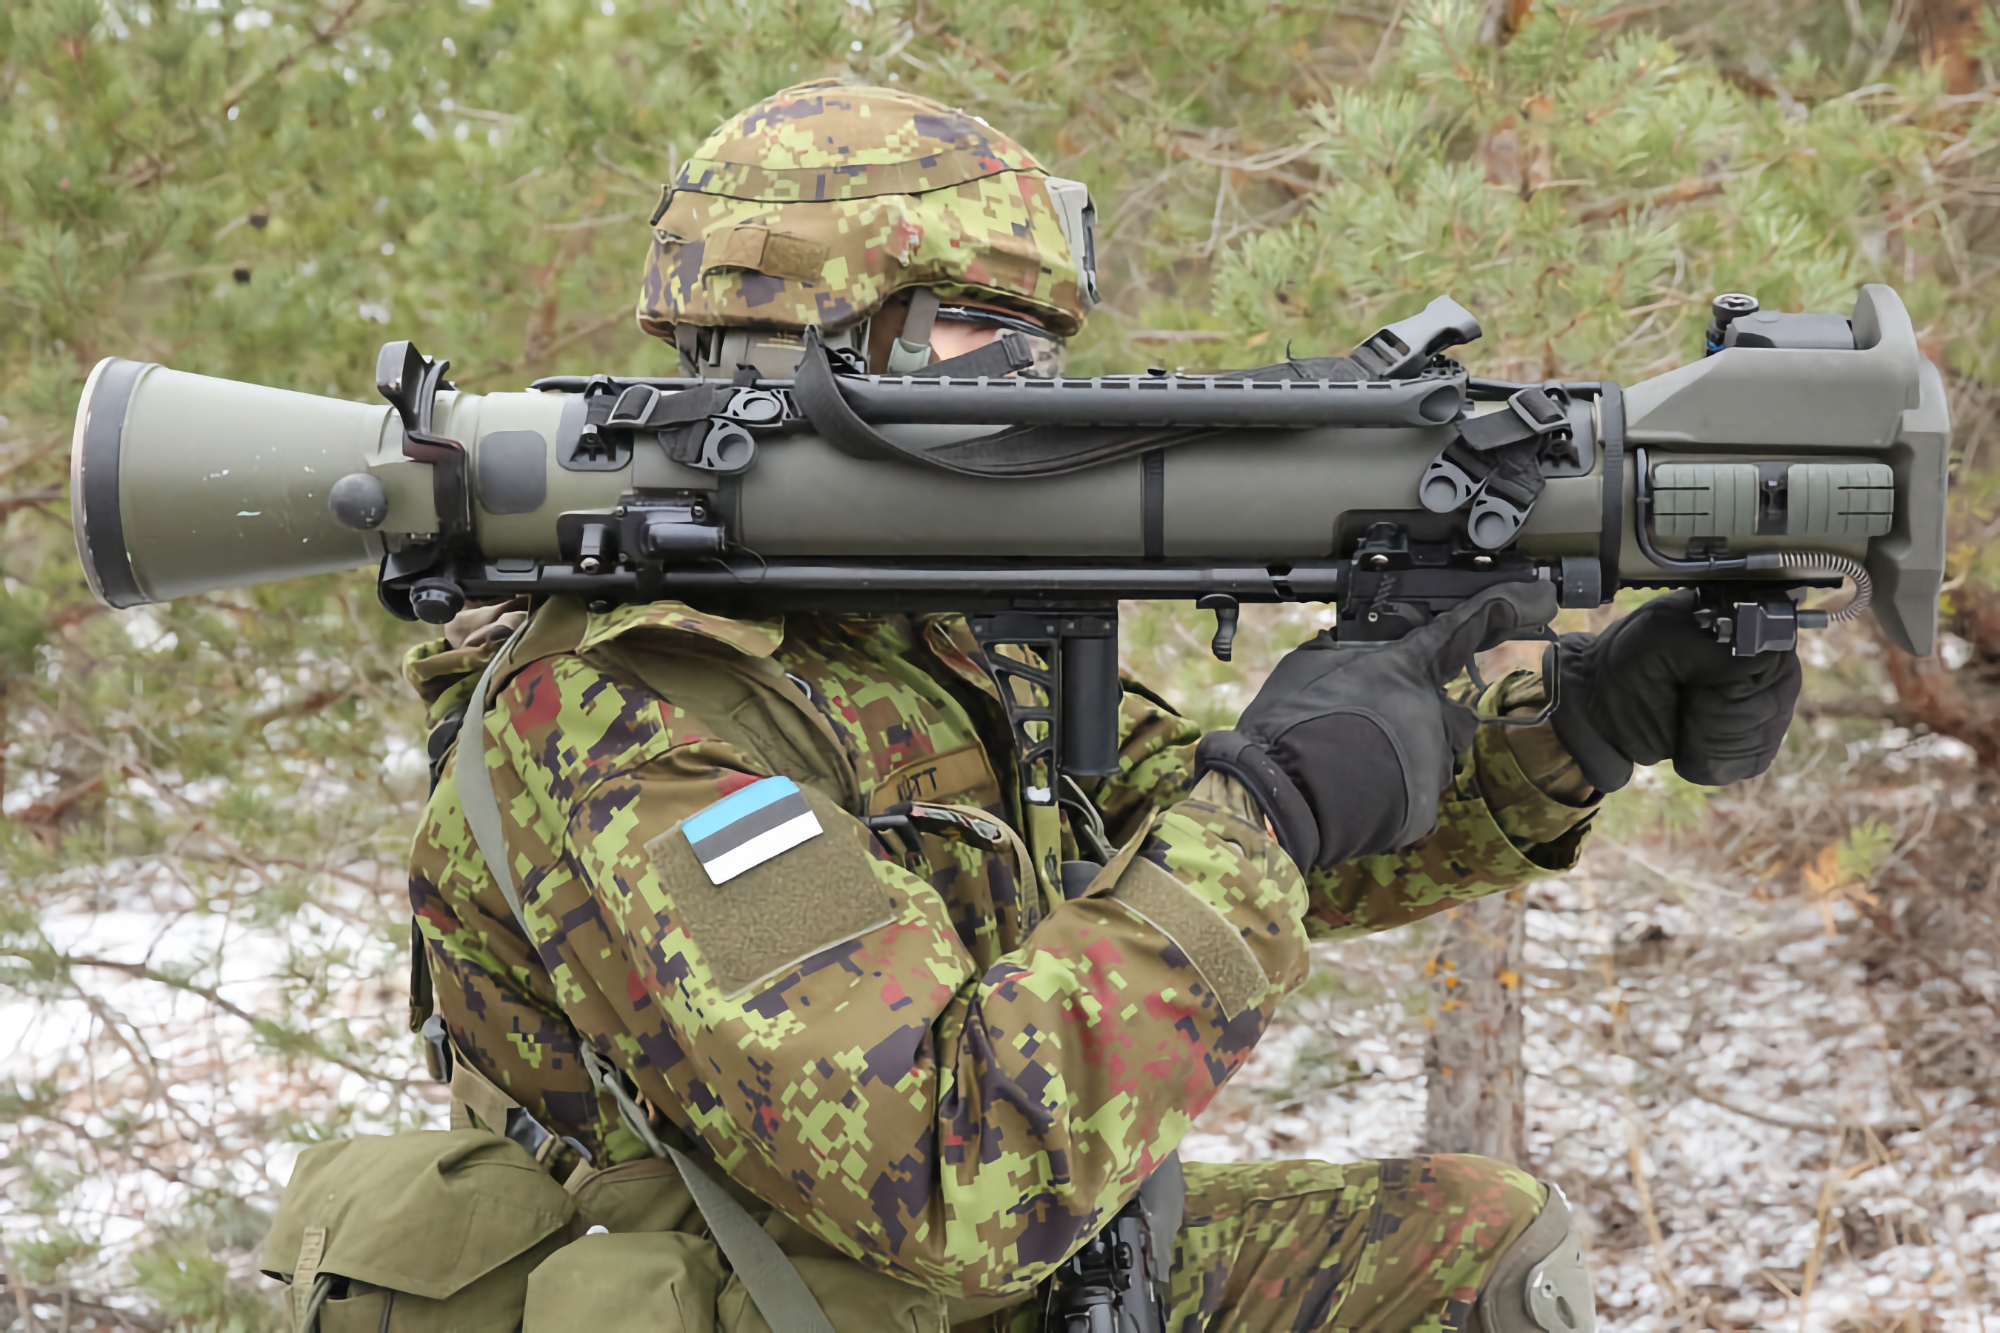 Contrat d'une valeur de 60 millions d'euros : L'OTAN commande à Saab un lot de lance-grenades Carl Gustaf